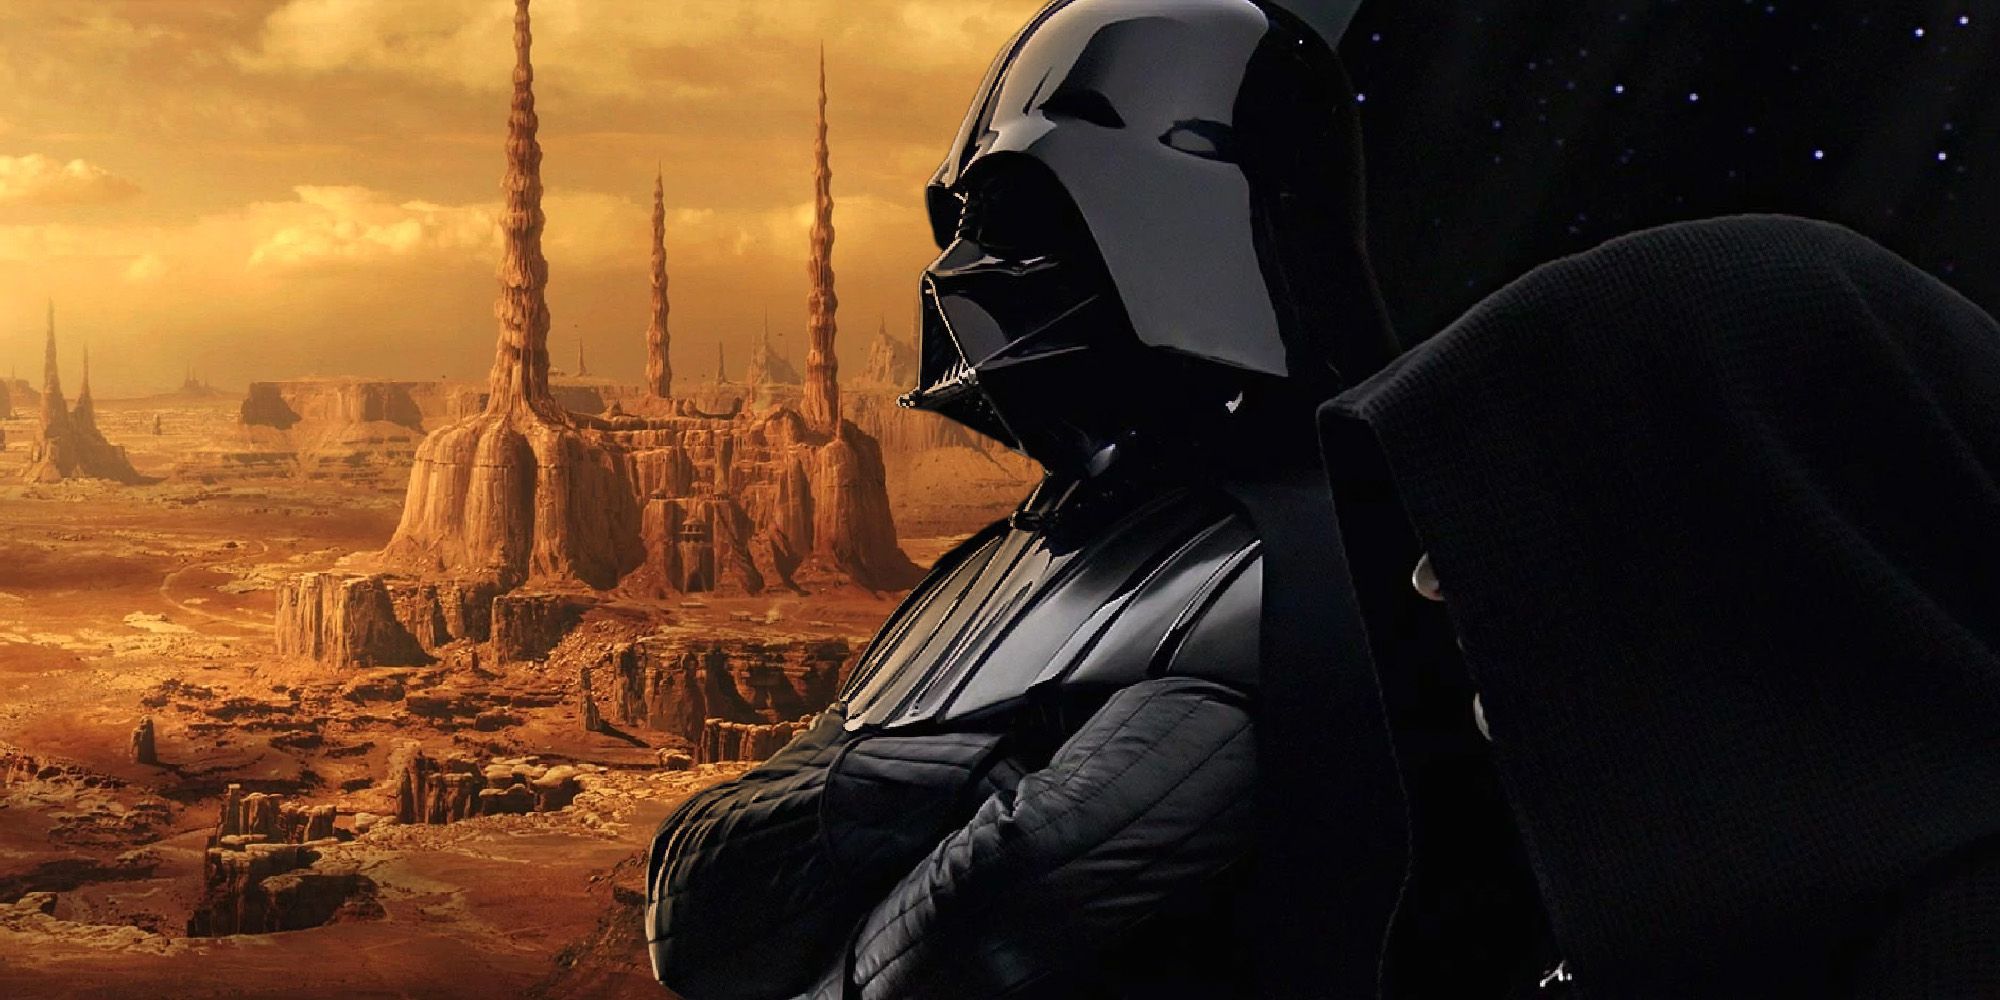 Darth Vader Emperor Palpatine Revenge of the Sith Geonosis